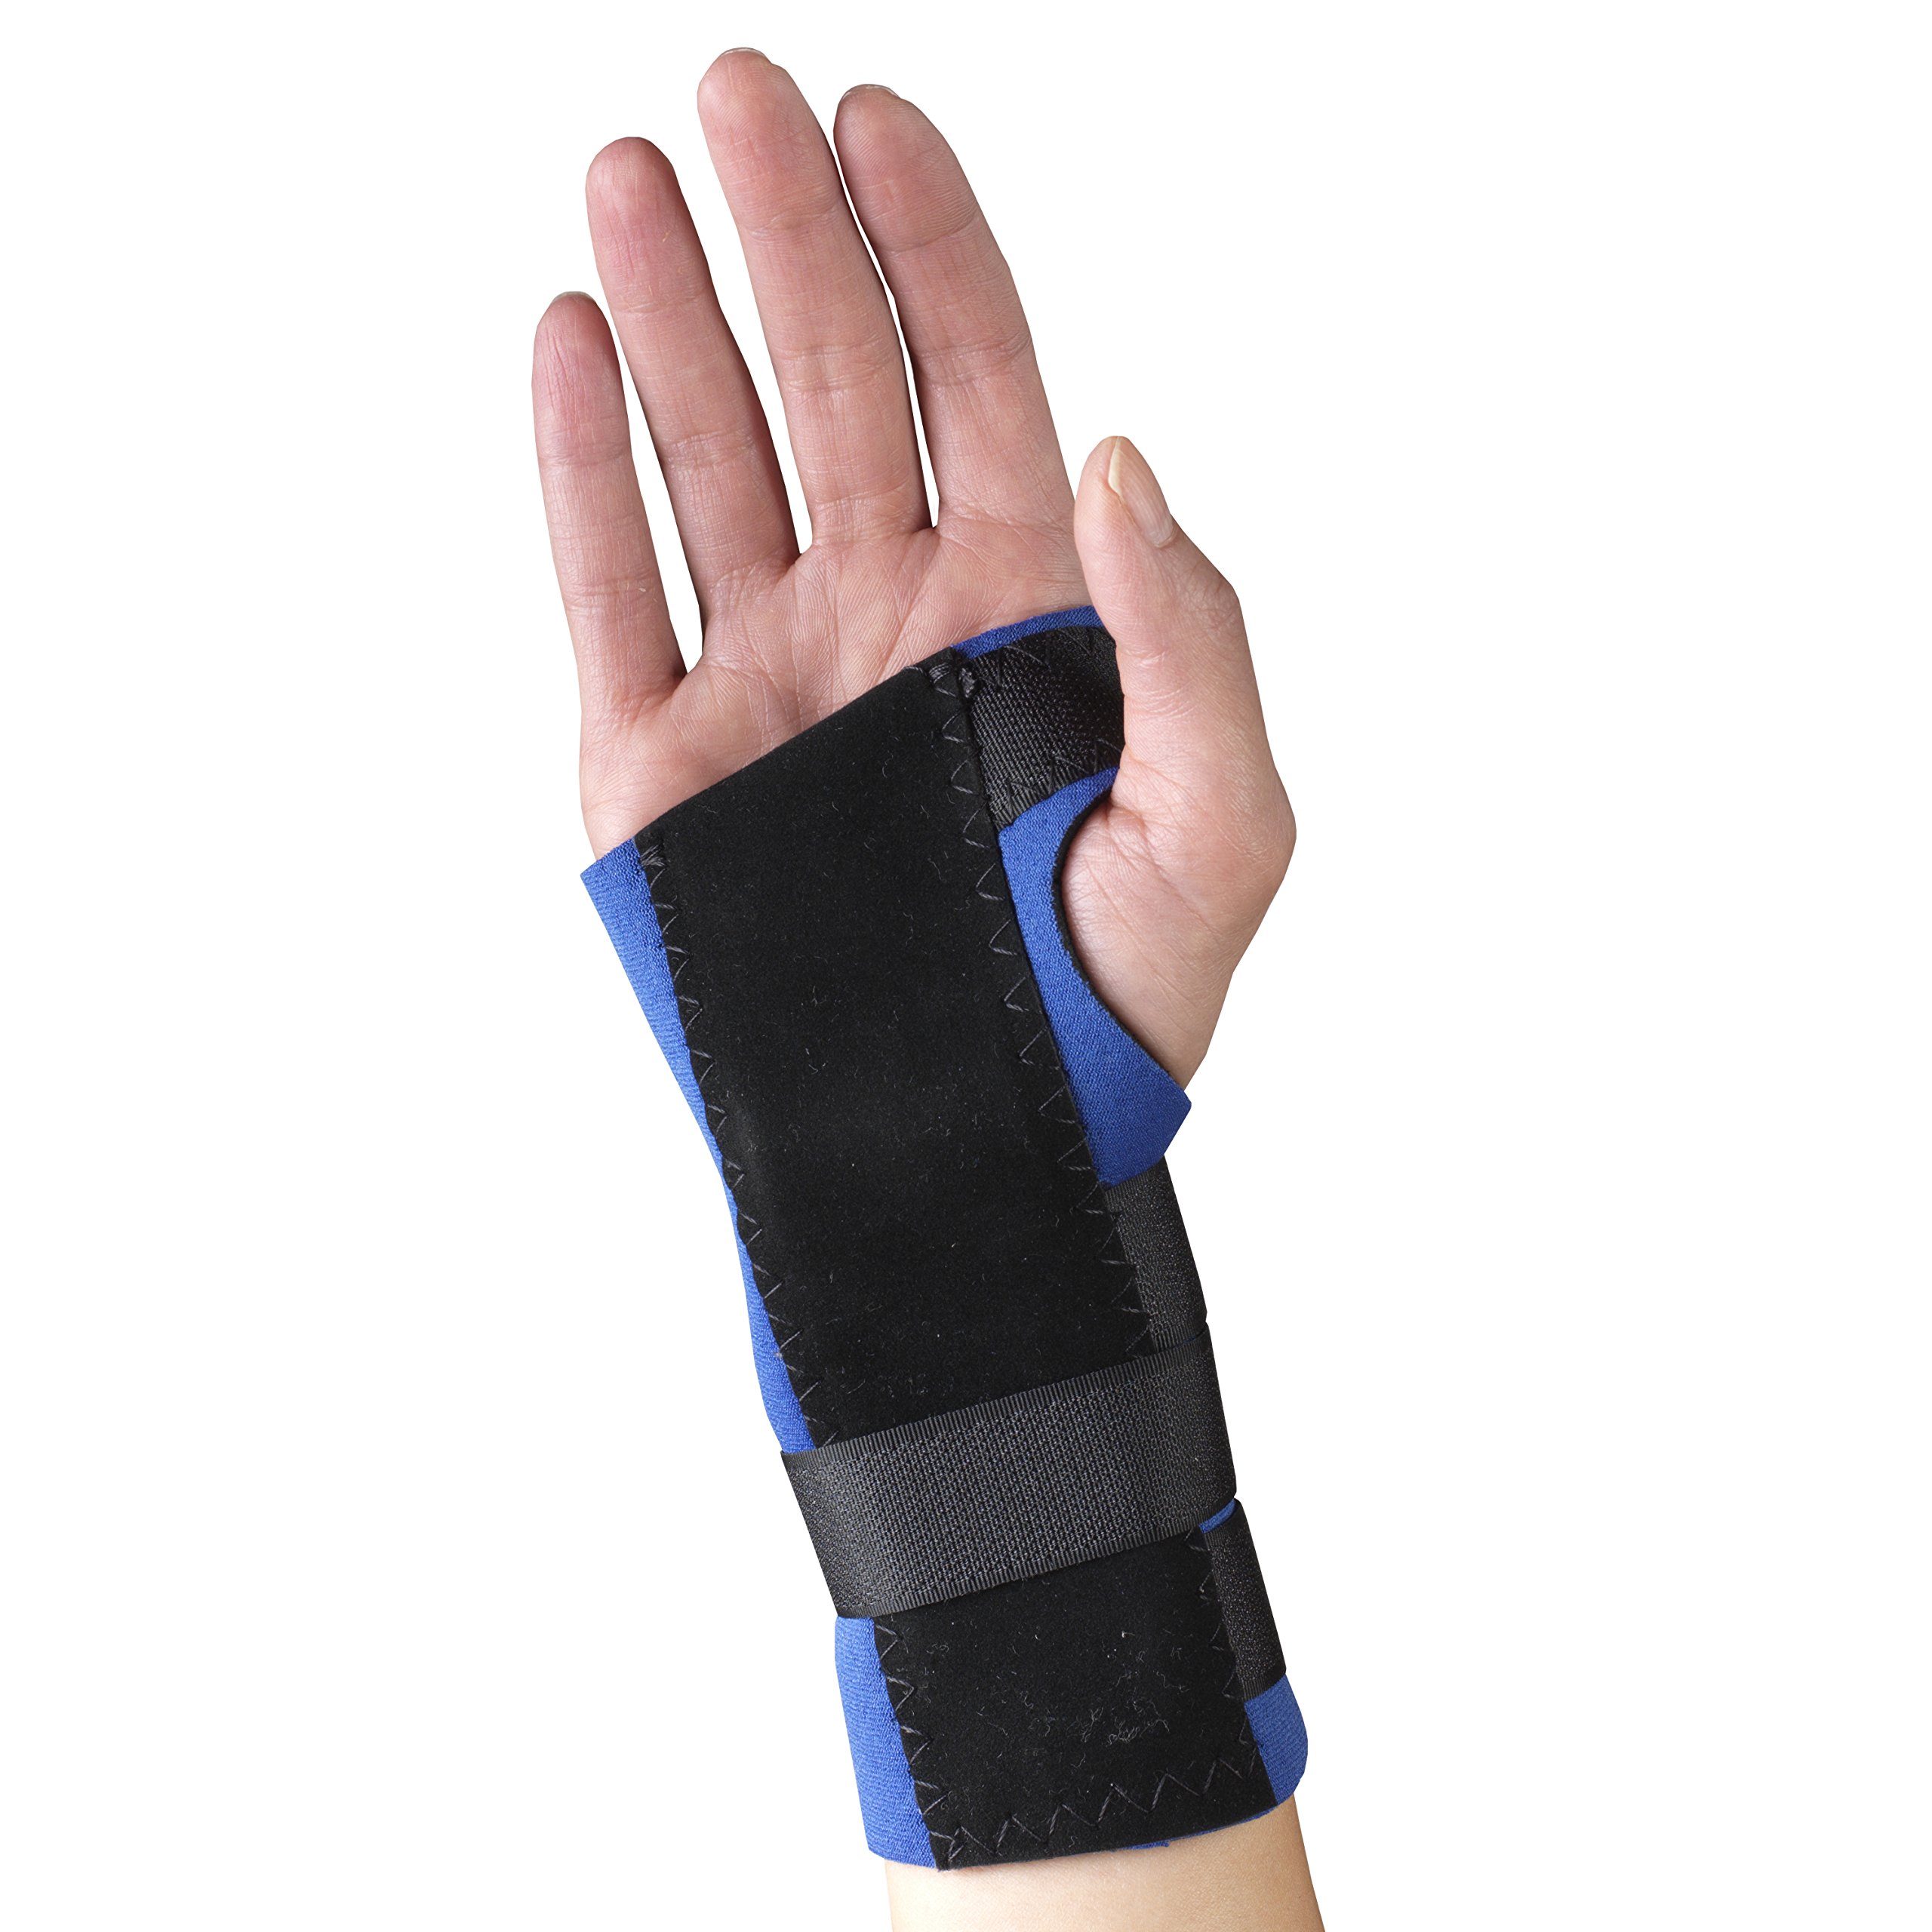 OTC Wrist Splint, Cock-up Style, Neoprene, Medium (Right Hand)